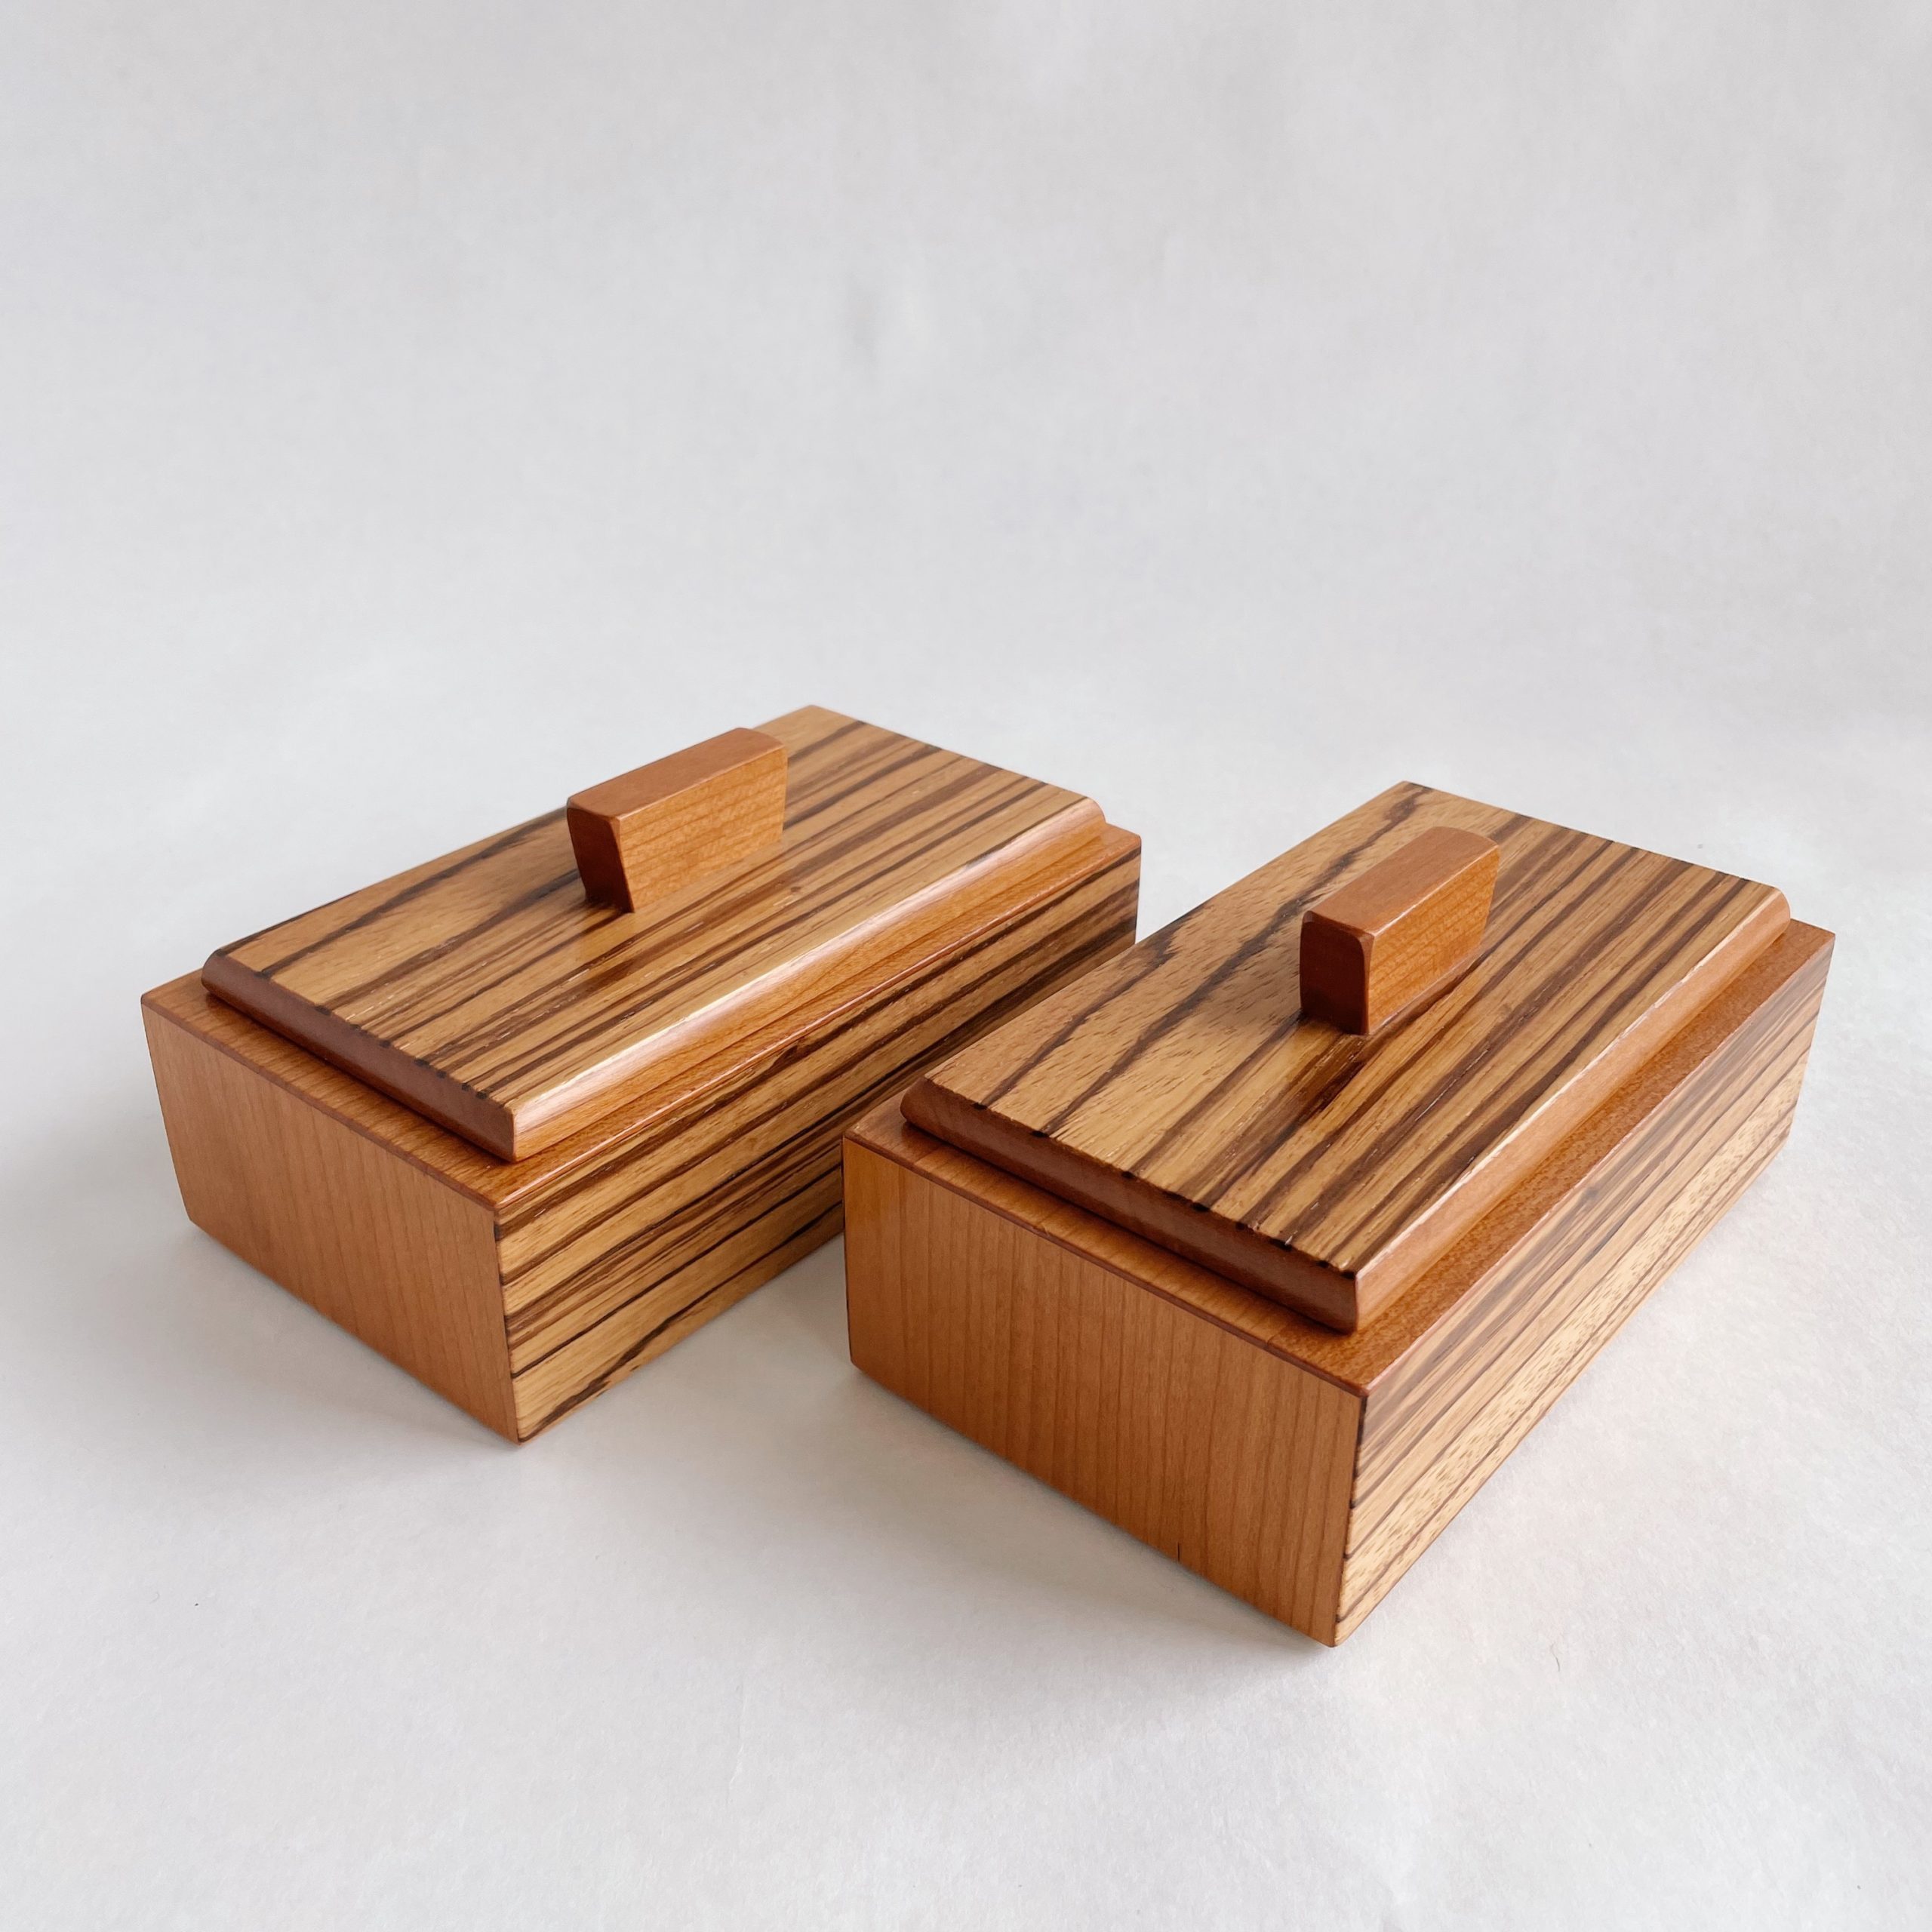 Zebra Wood Box | Charlett Woodworking